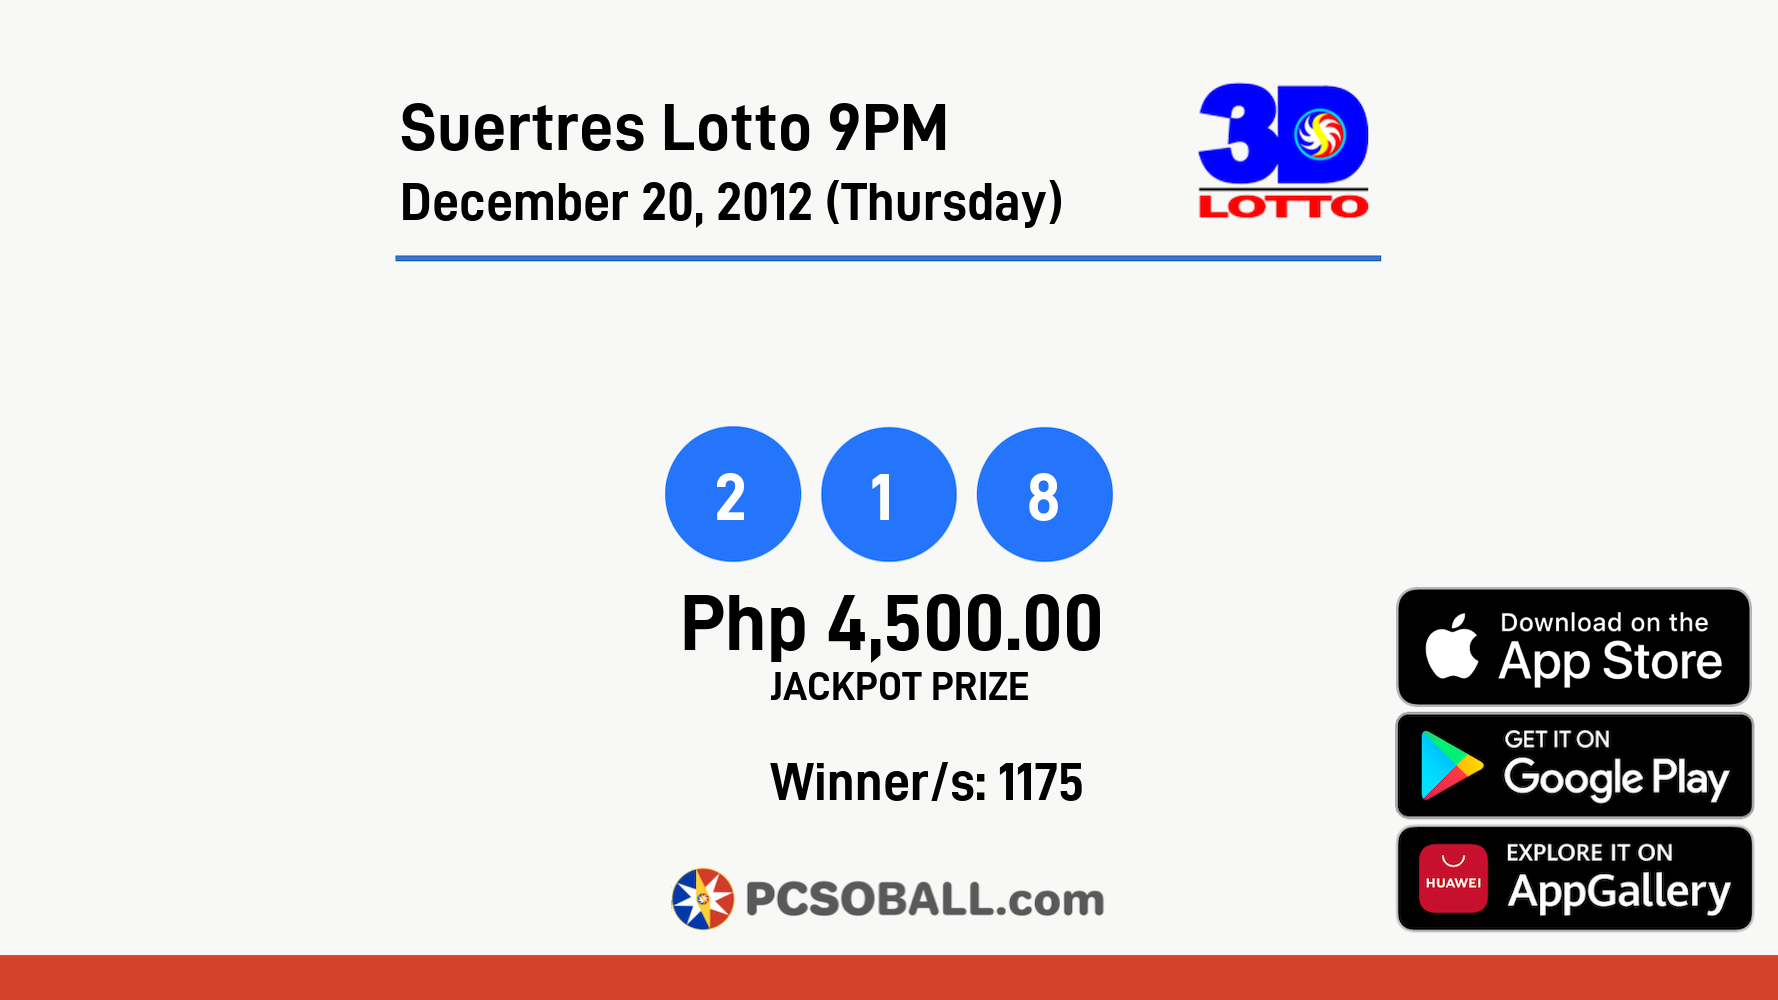 Suertres Lotto 9PM December 20, 2012 (Thursday) Result